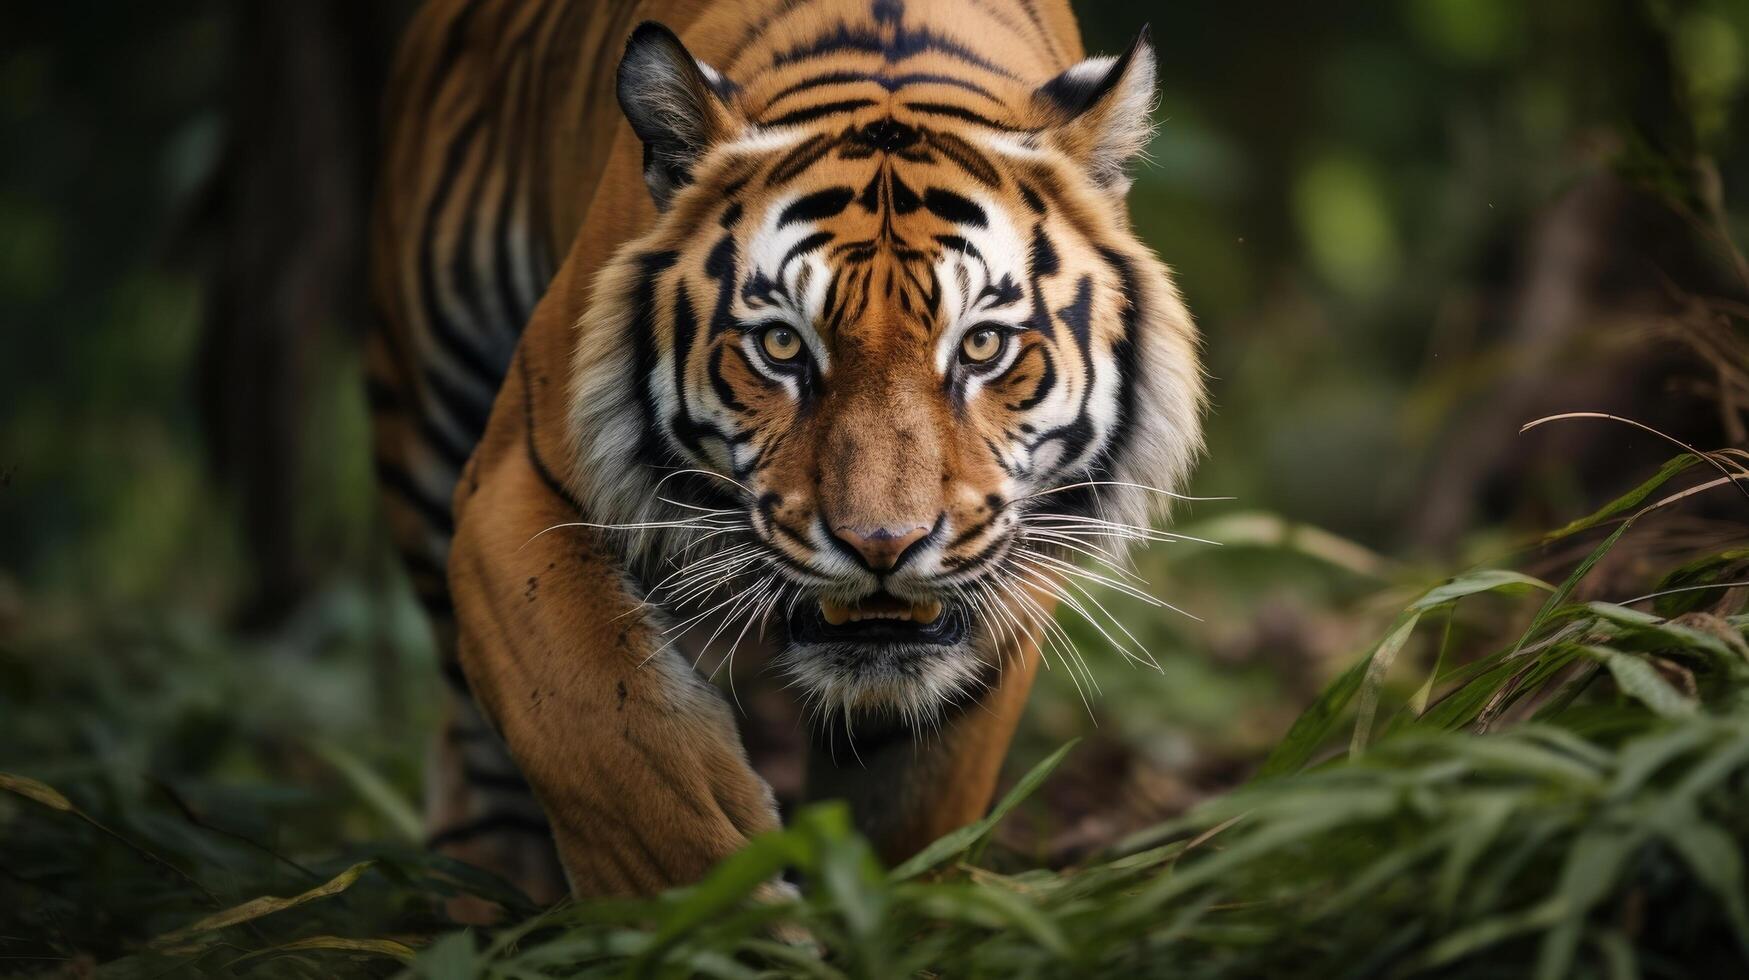 AI generated Closeup of tigress with fierce expression in jungle photo